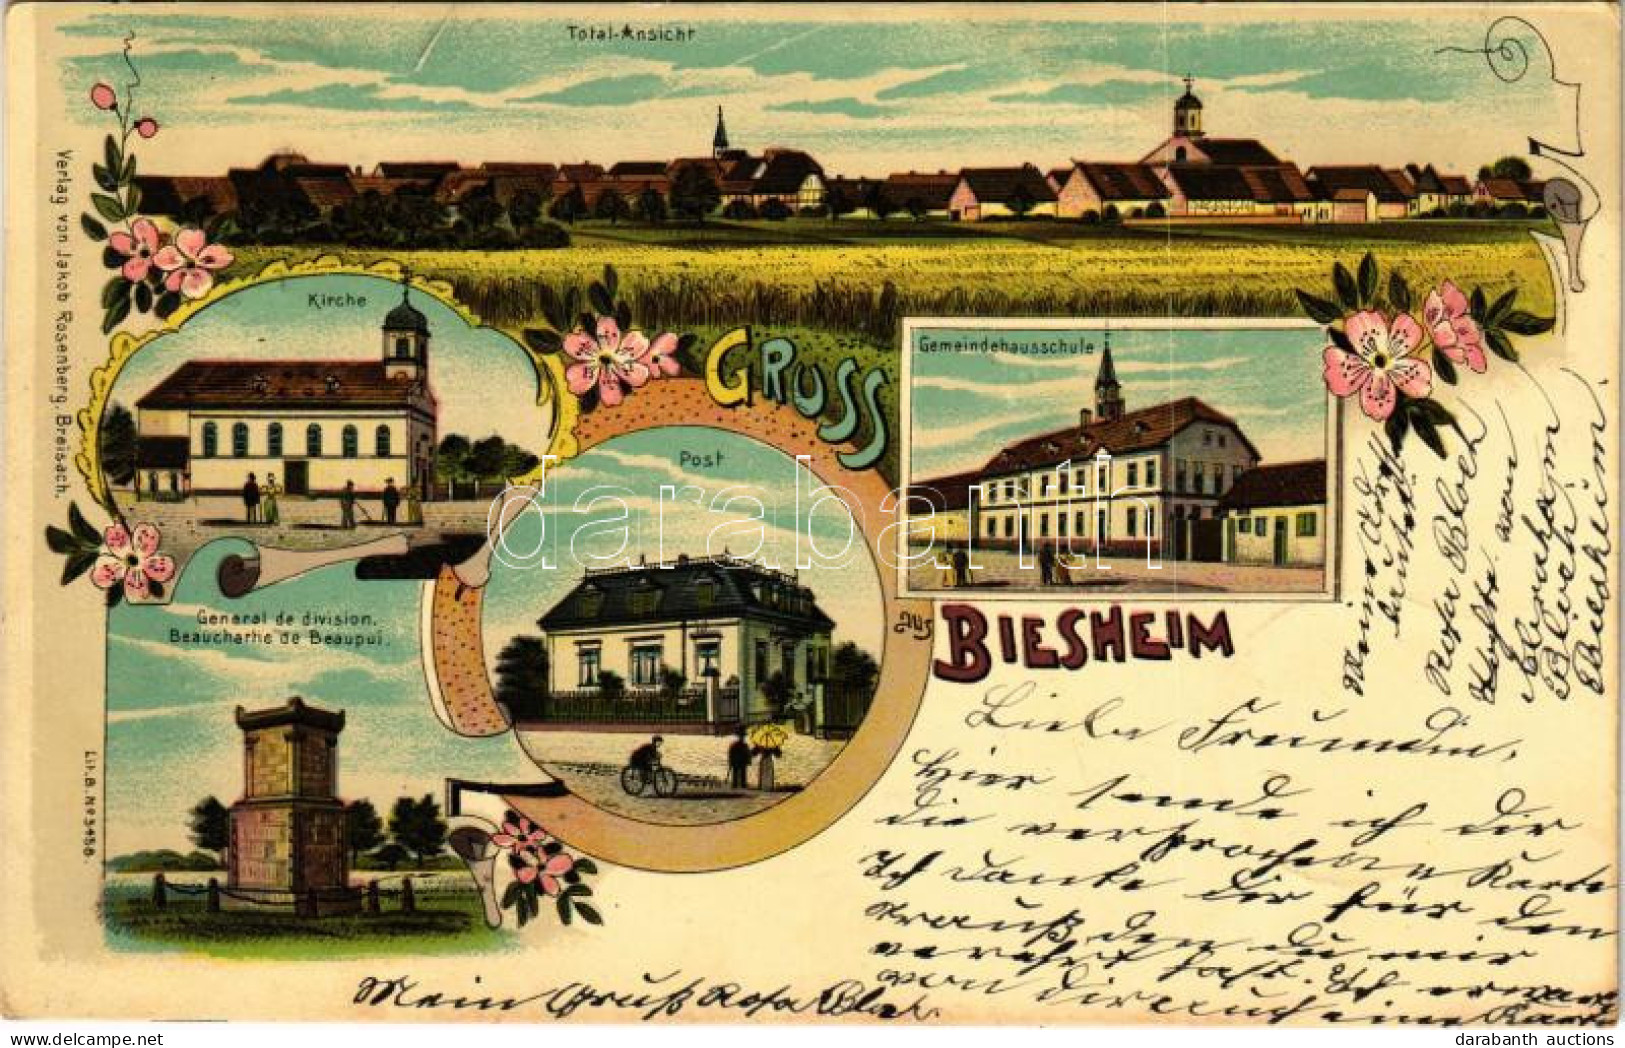 T2/T3 1903 Biesheim, Biese; General De Division. Beauchartie De Beaupui, Kirche, Post, Total Ansicht, Gemeindehausschule - Ohne Zuordnung